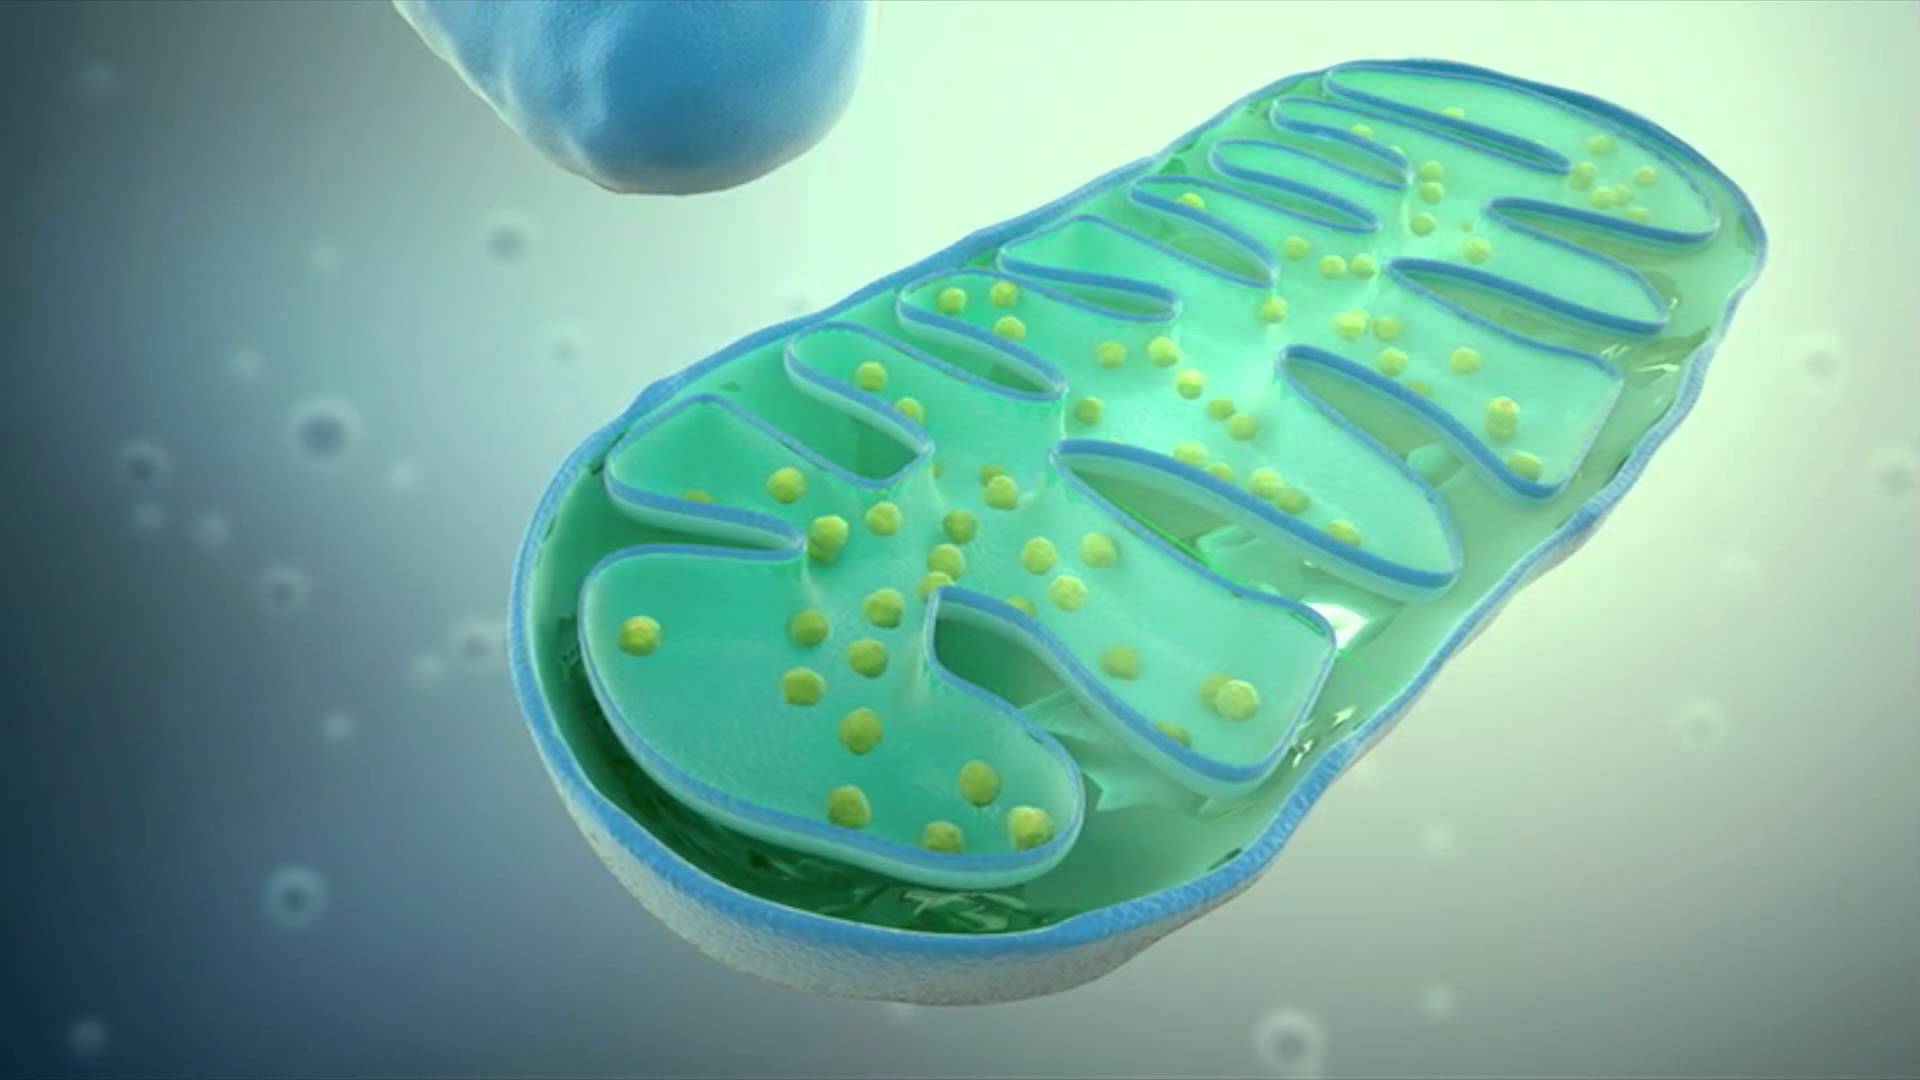 Best Mitochondria Wallpaper